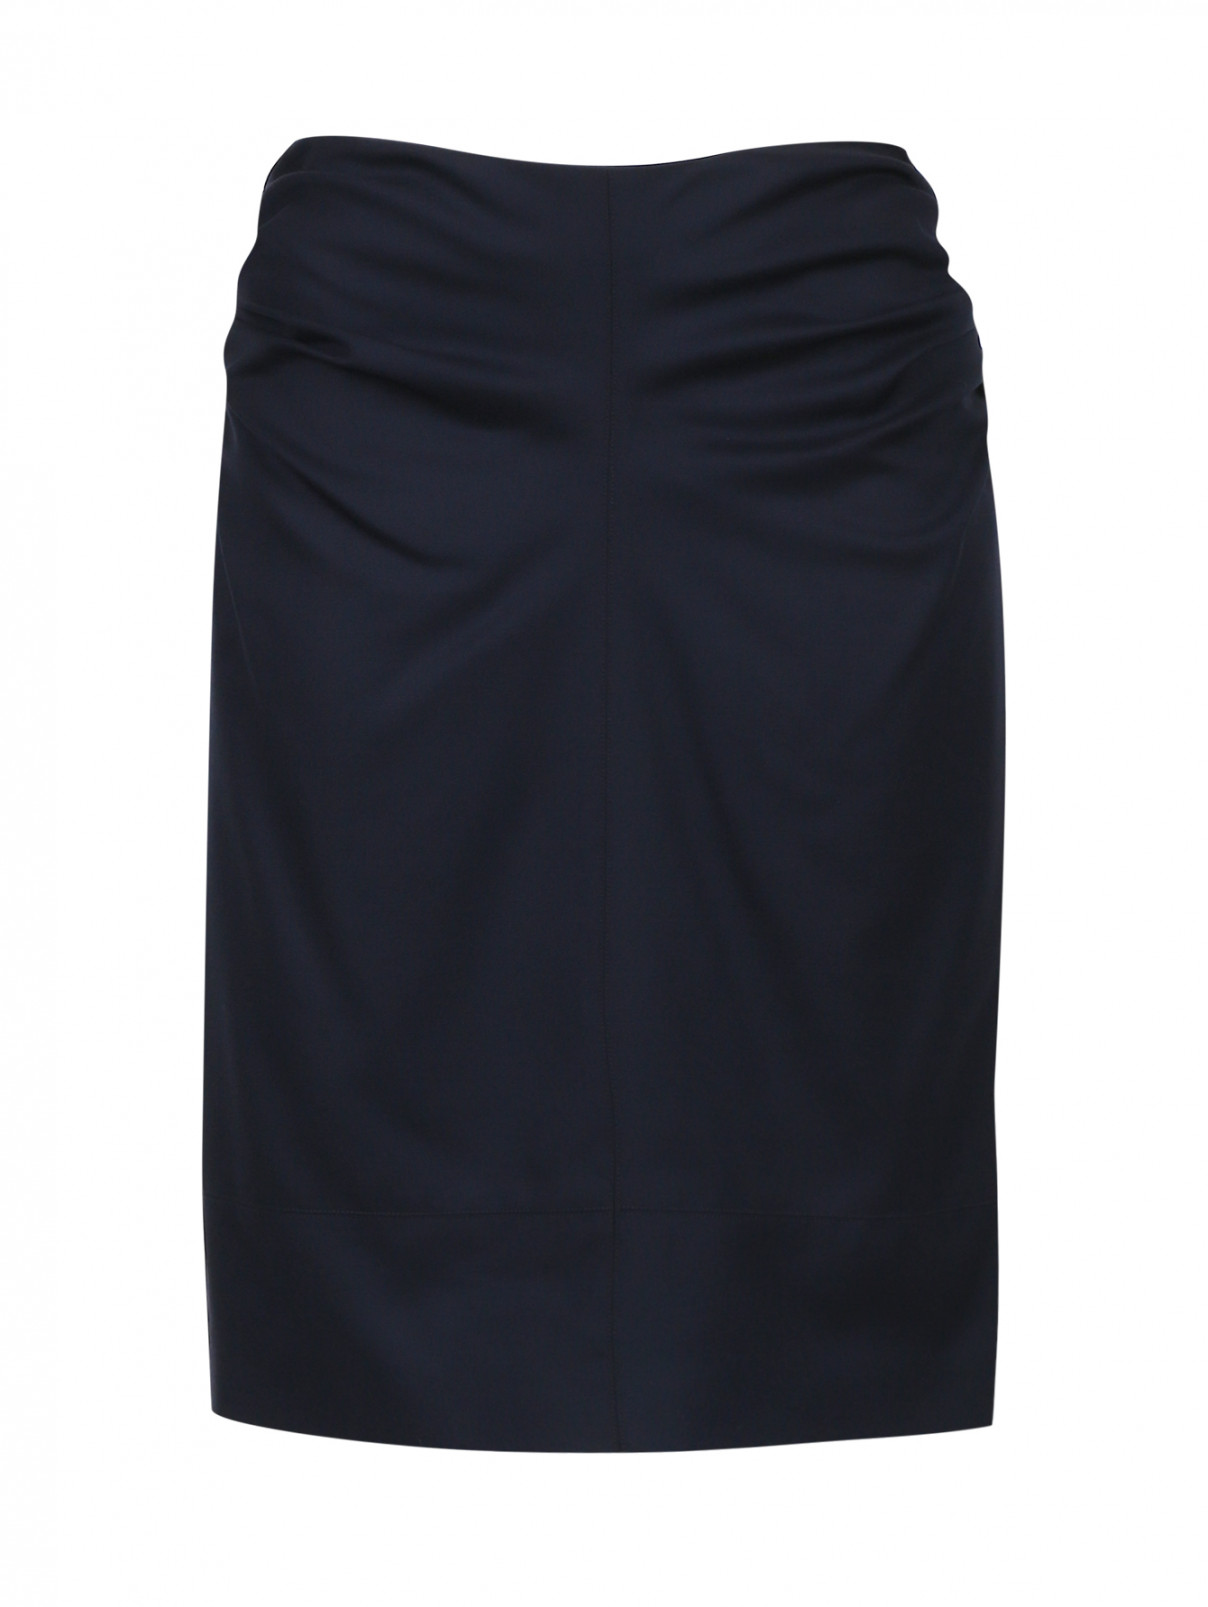 Шерстяная юбка-карандаш Anne Valerie Hash  –  Общий вид  – Цвет:  Синий